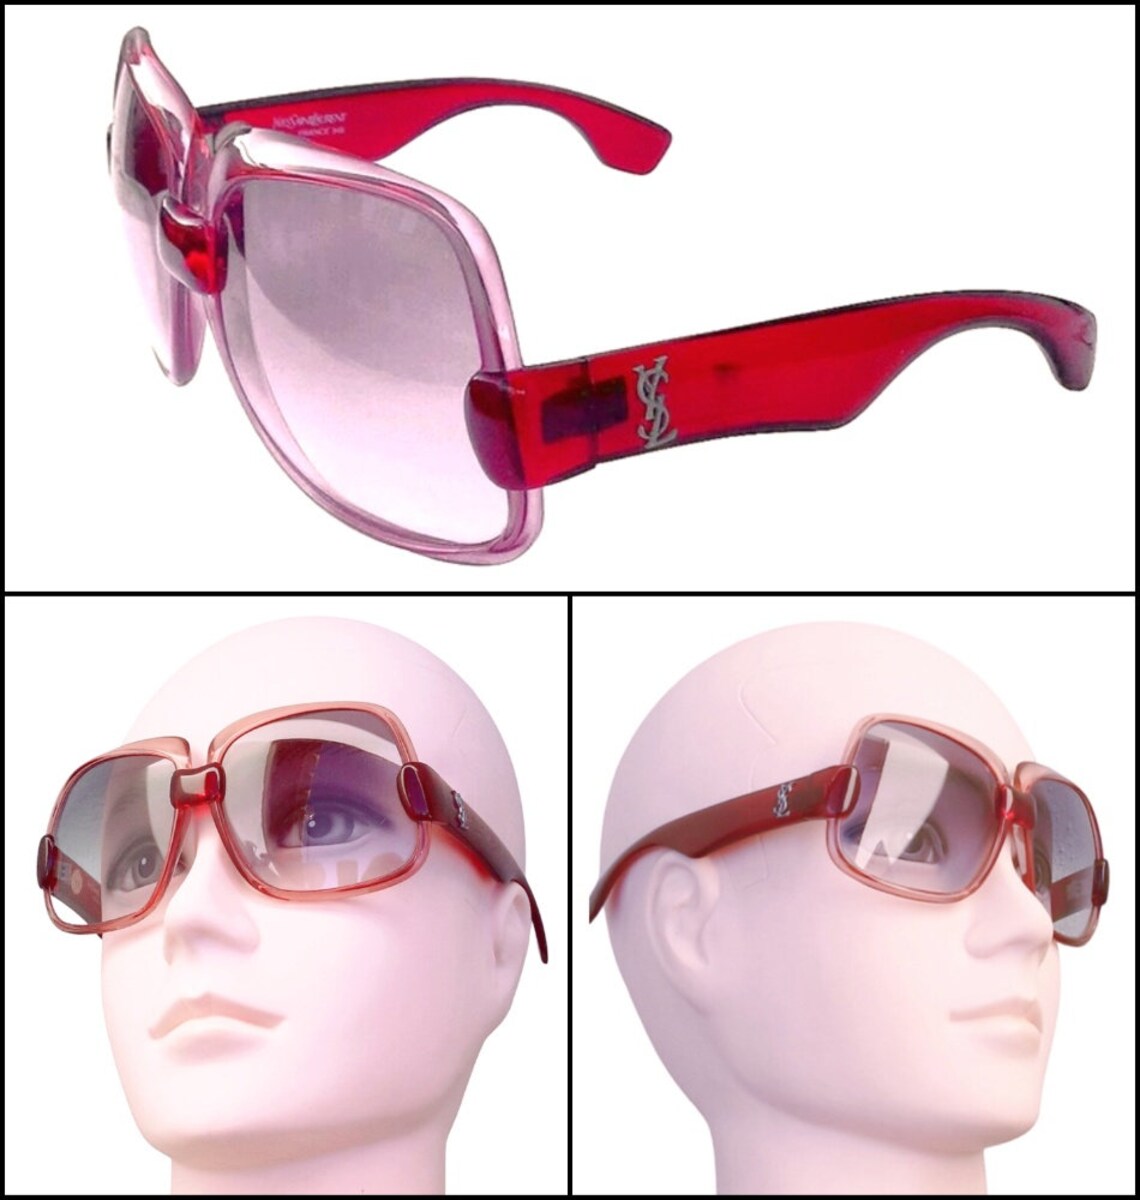 Yves Saint Laurent #Sunglasses #vintage 70s NEW - Translucent Cherry Pink Frame, Silver Grey Gradient Lenses | Model 545 + #YSL Case #giftsforher via #EtsyShop #EtsySeller t.ly/kQh5y